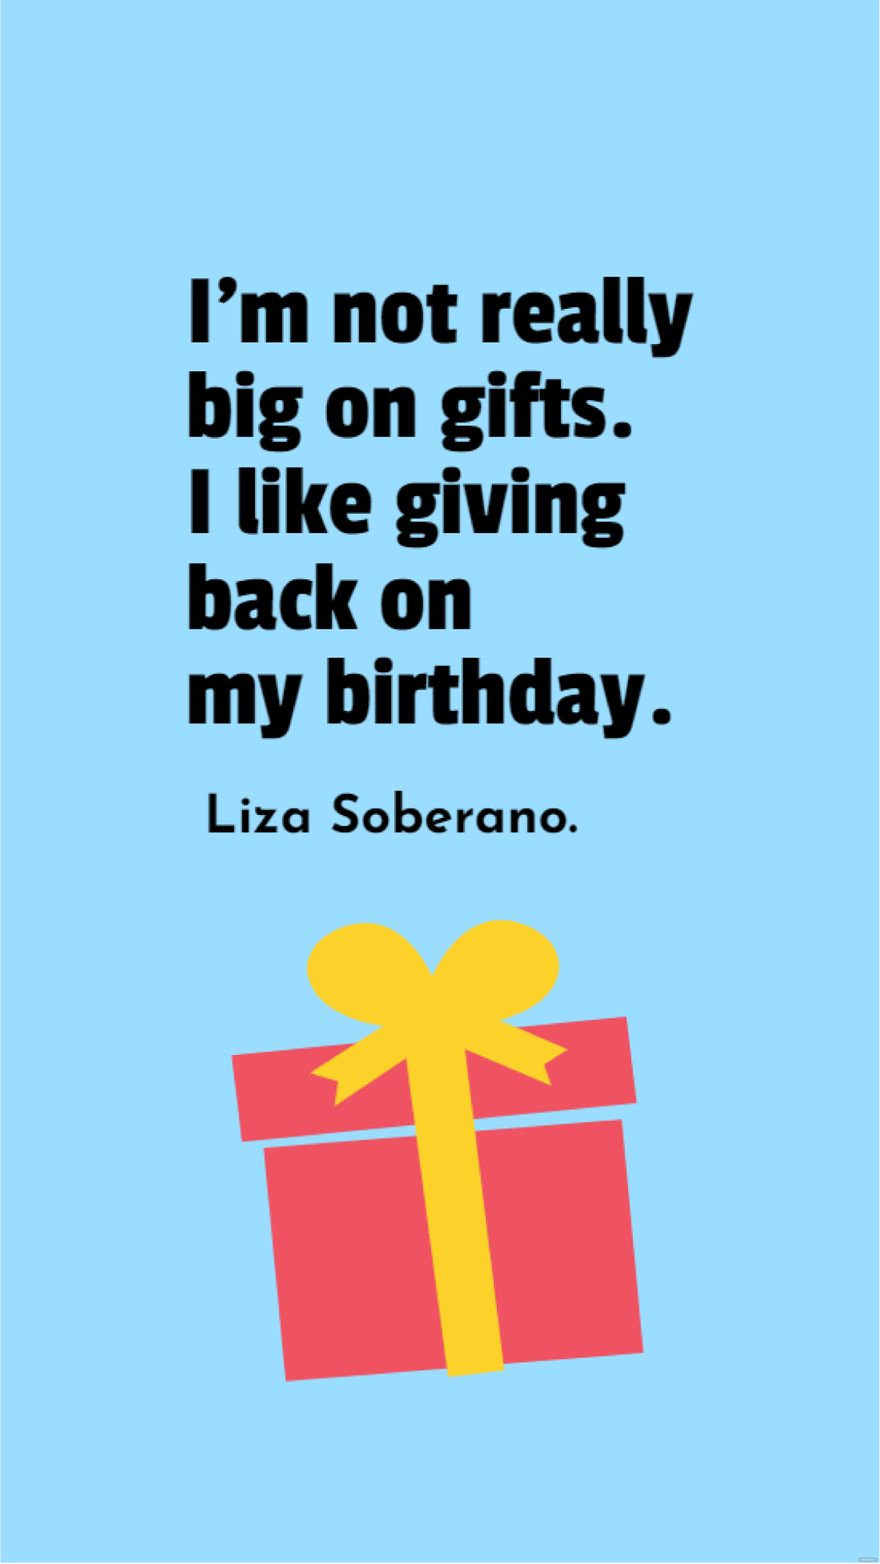 Liza Soberano - I'm not really big on gifts. I like giving back on my birthday.